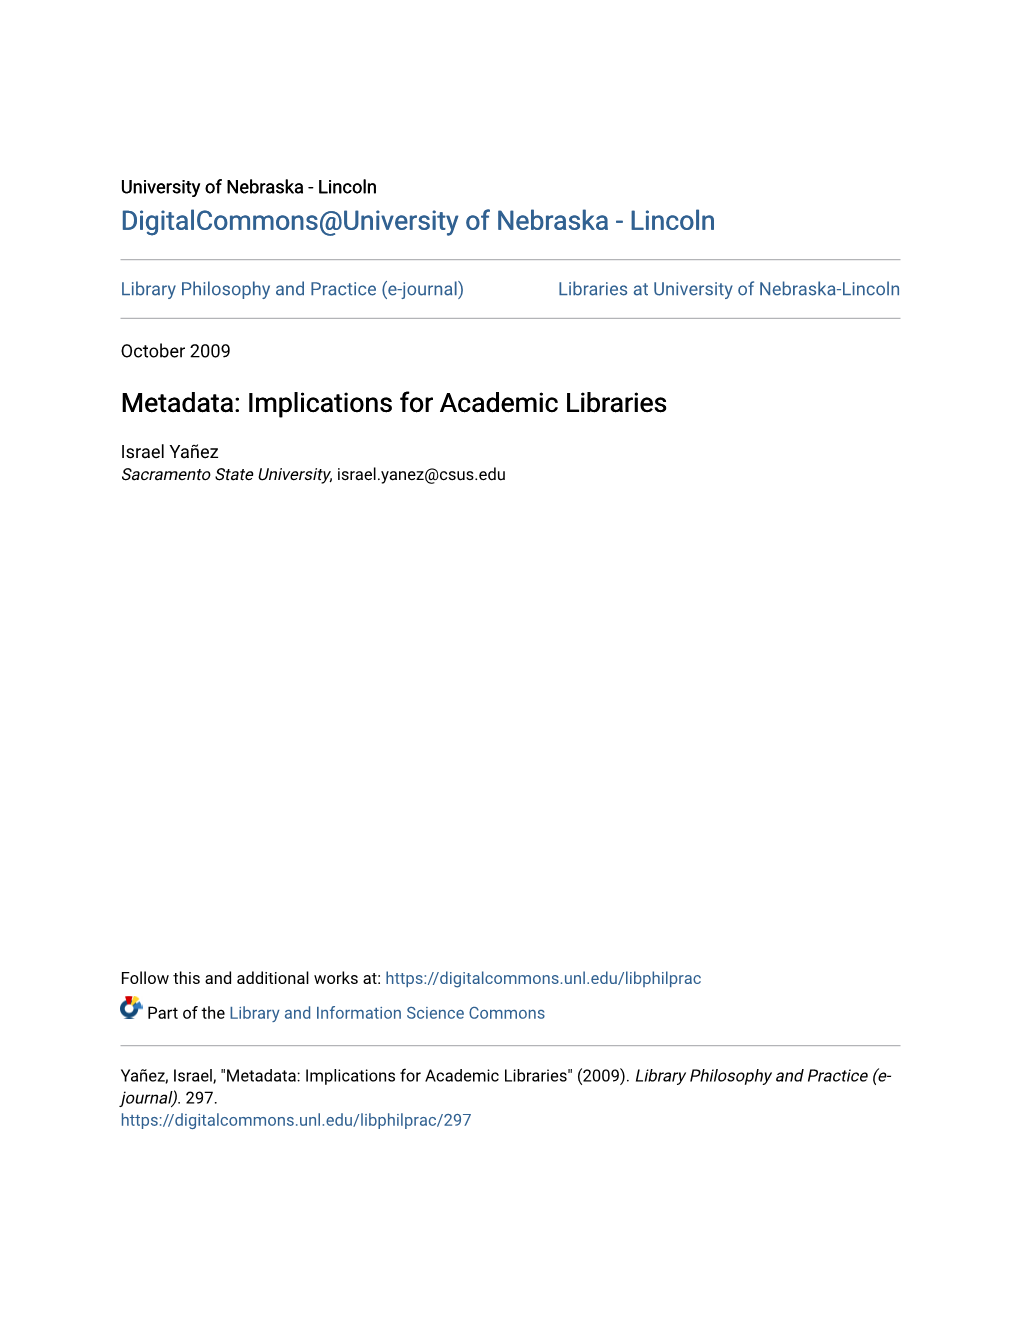 Metadata: Implications for Academic Libraries